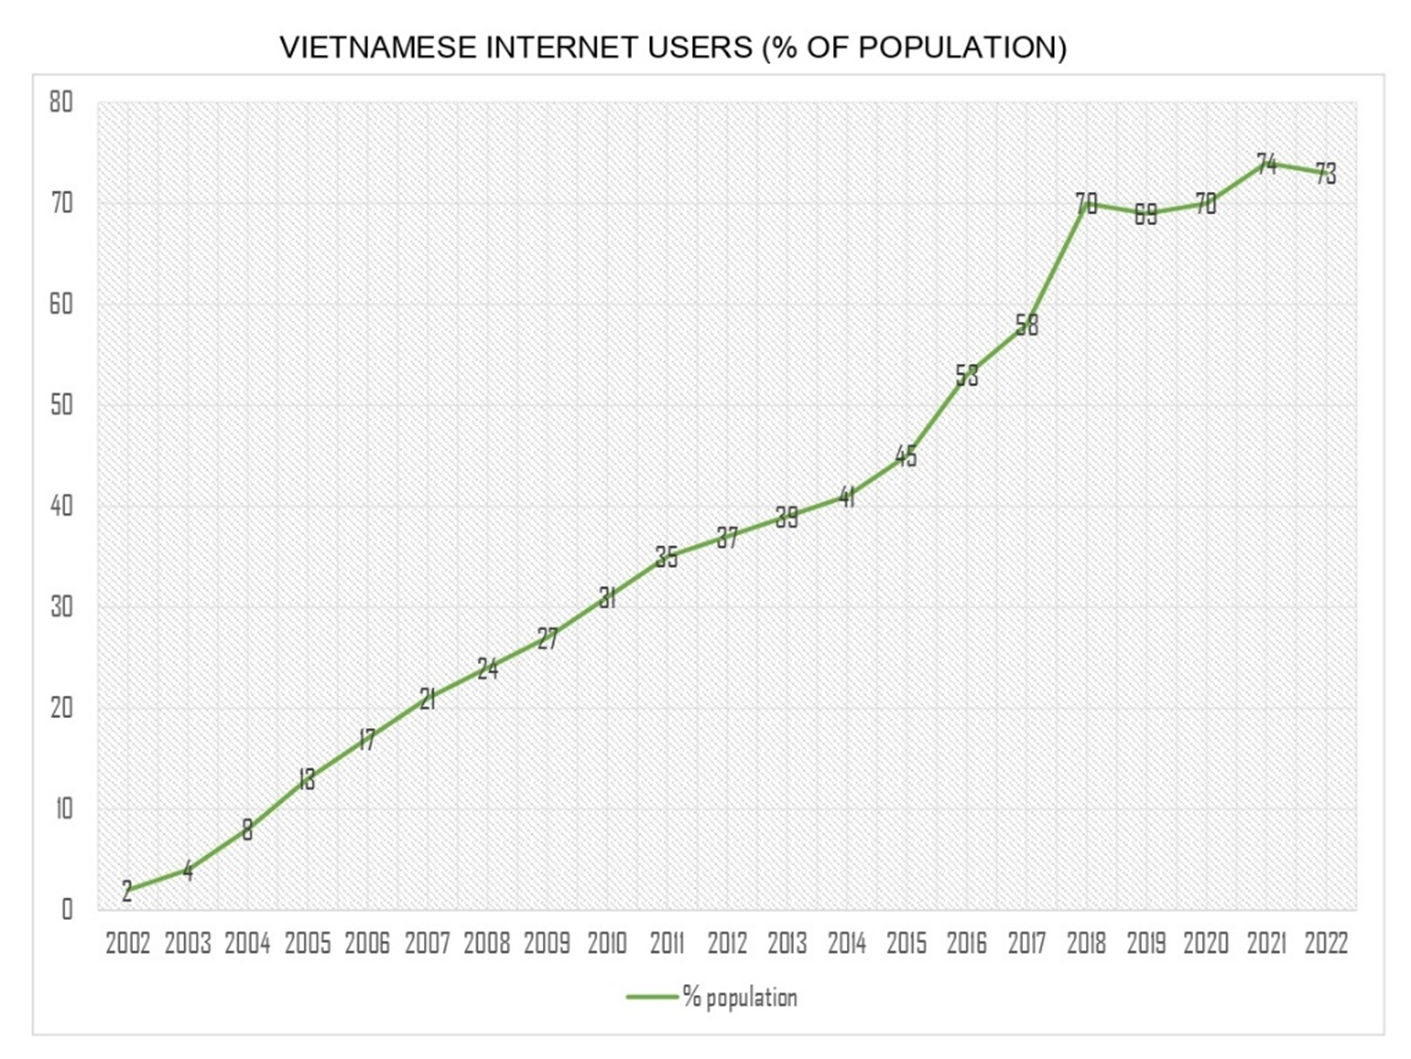 Statistics of Vietnam Internet User